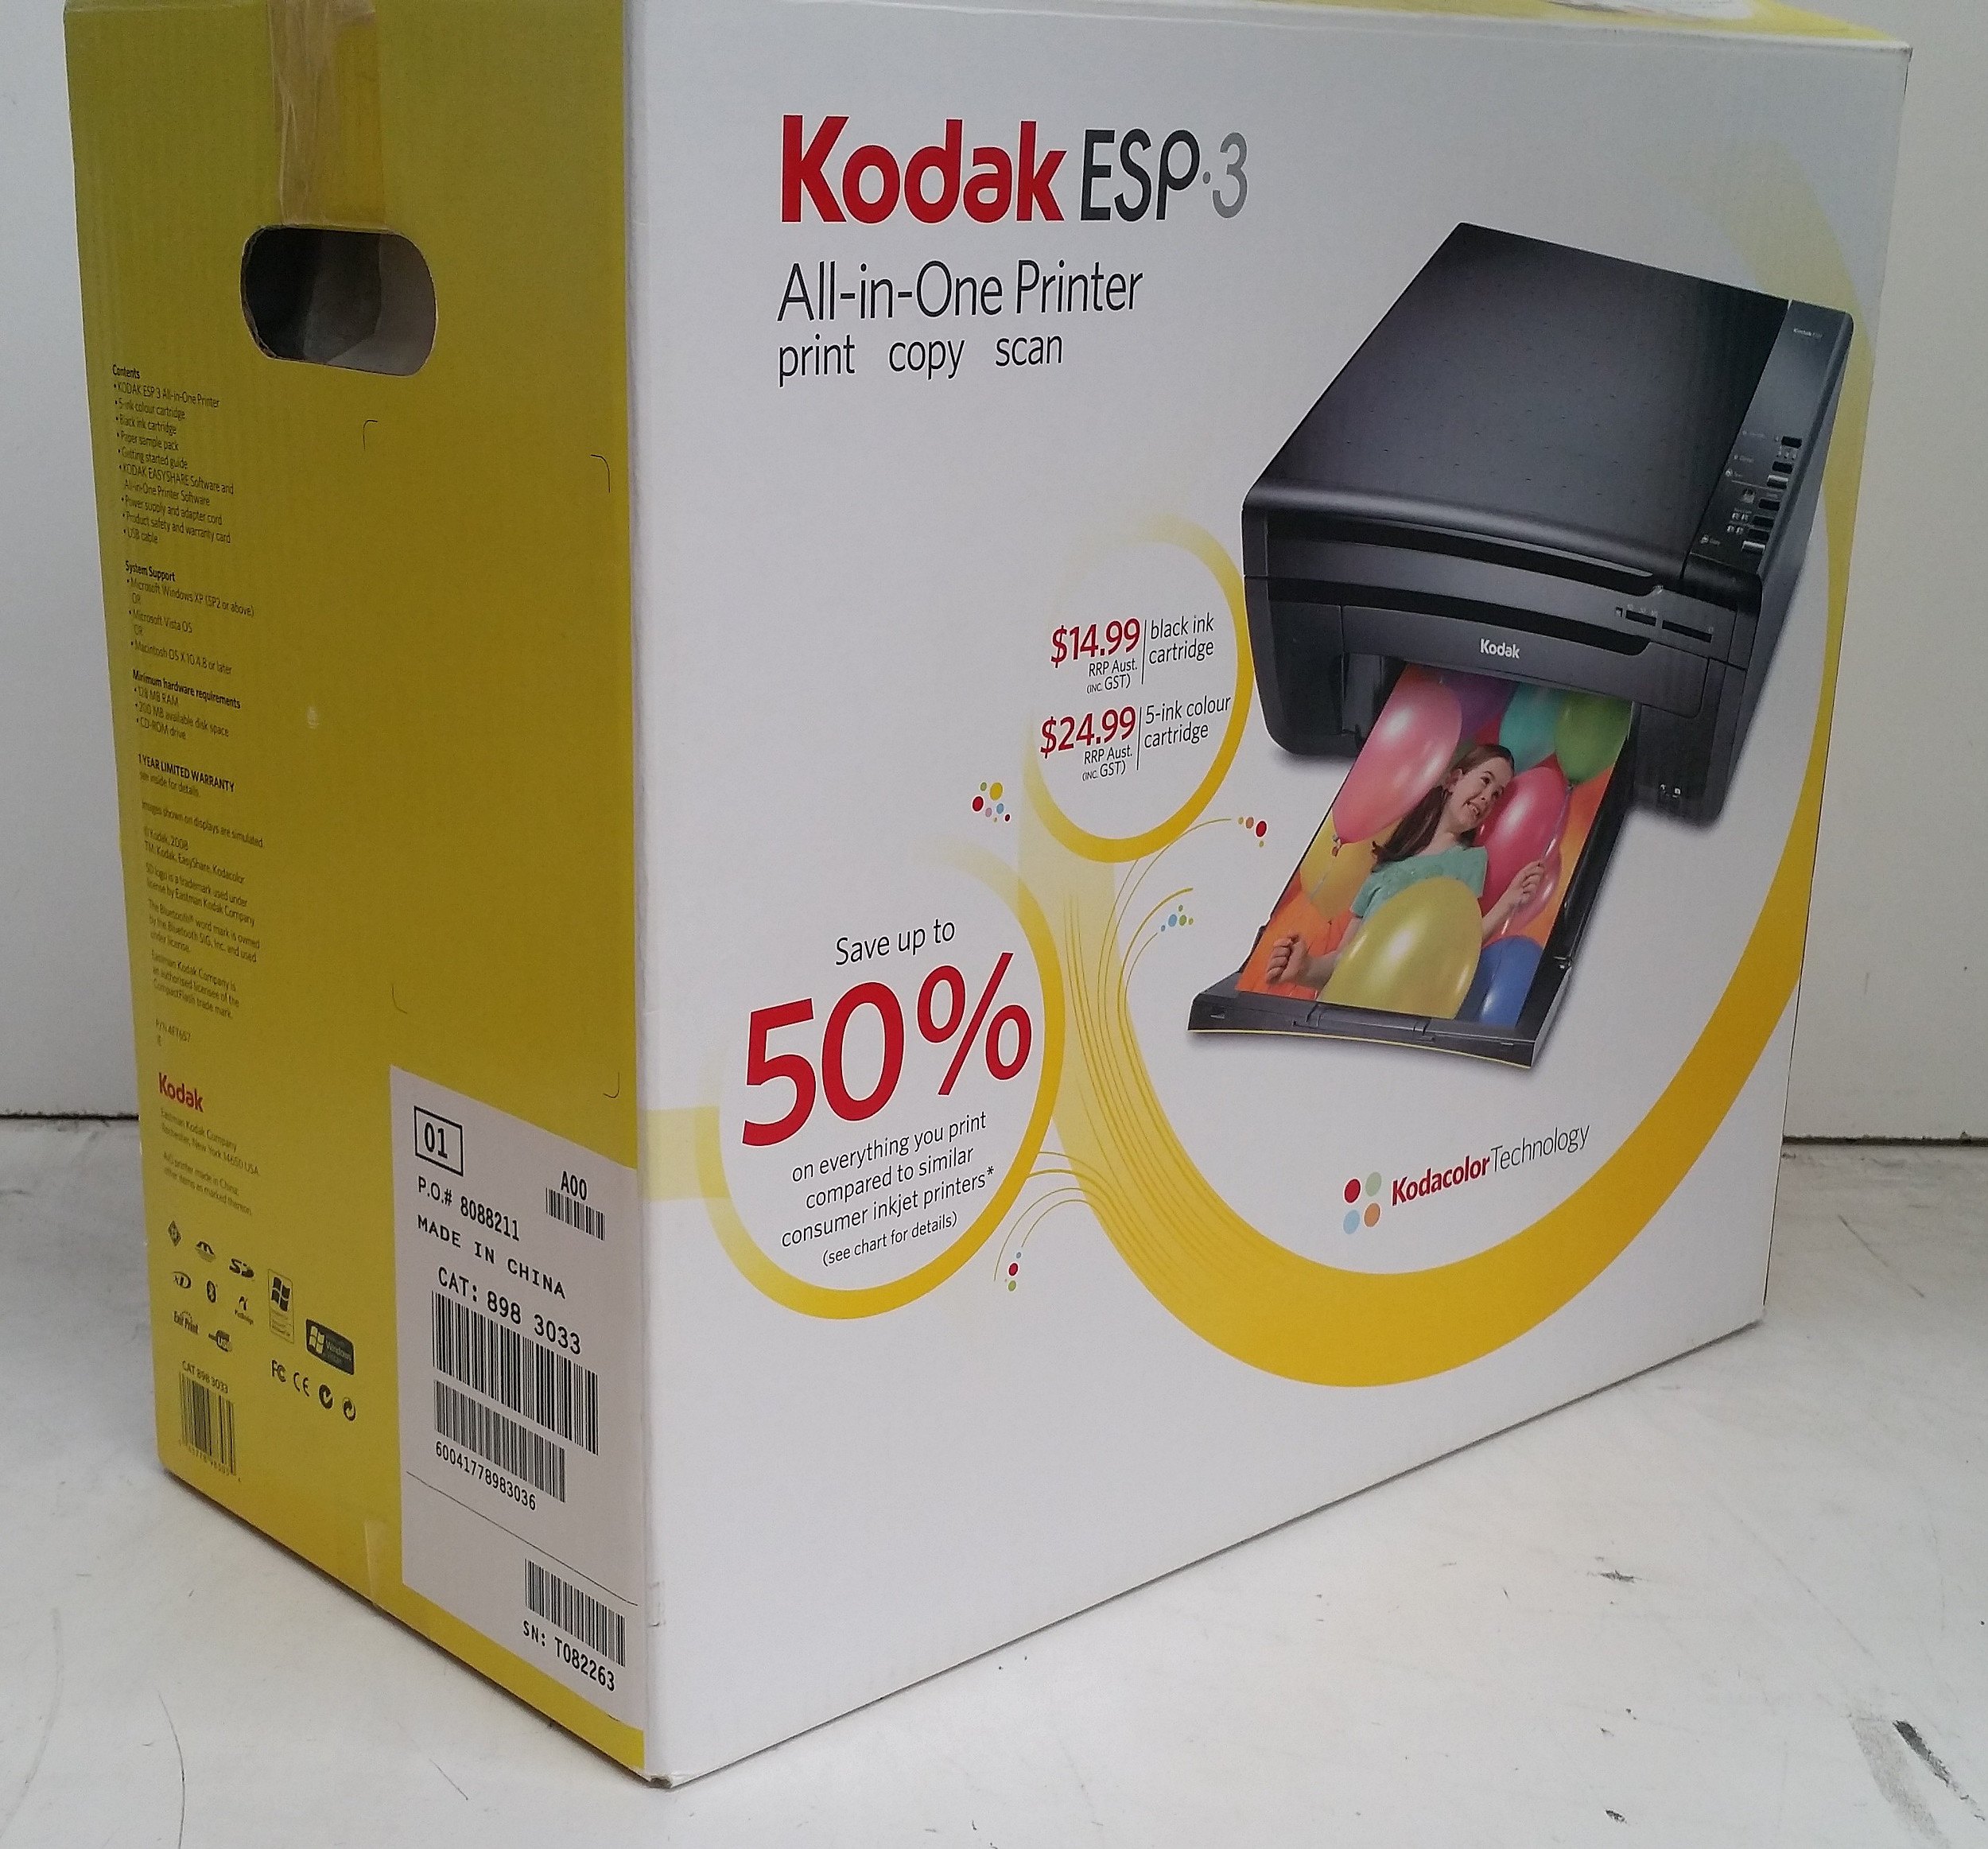 cannot install kodak printer software